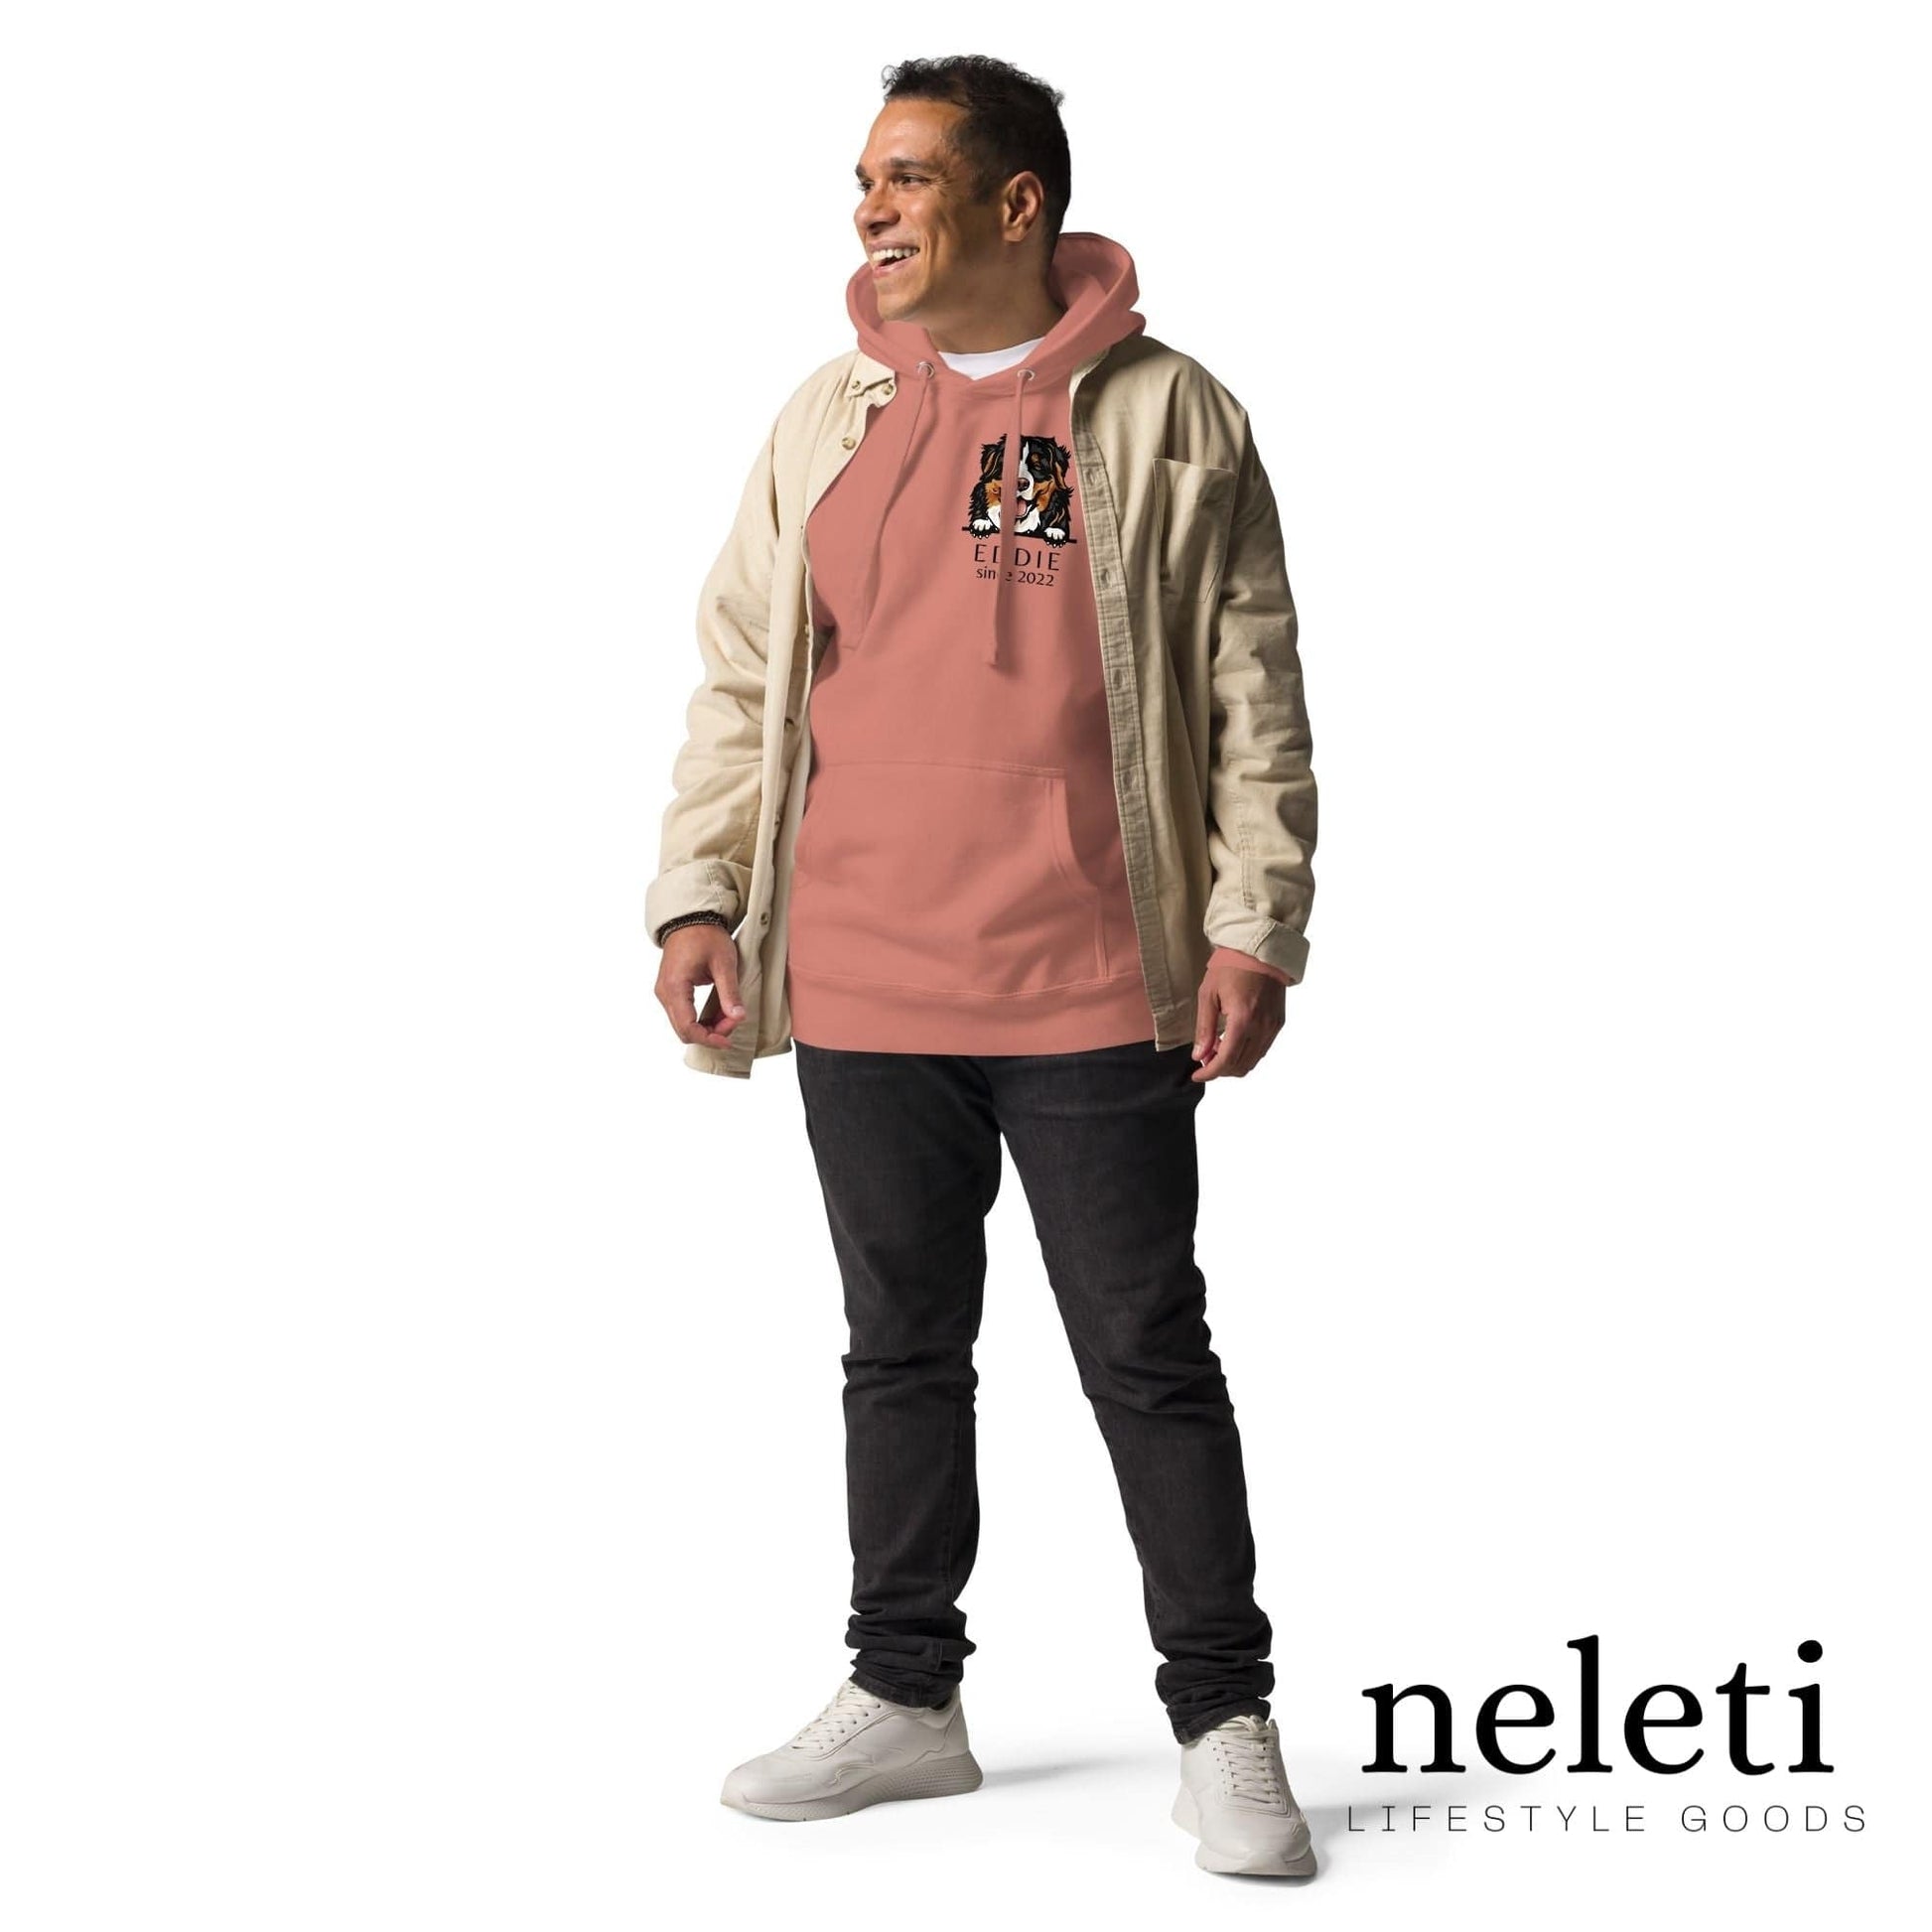 neleti.com-custom-dusty-rose-hoodie-for-dog-lovers